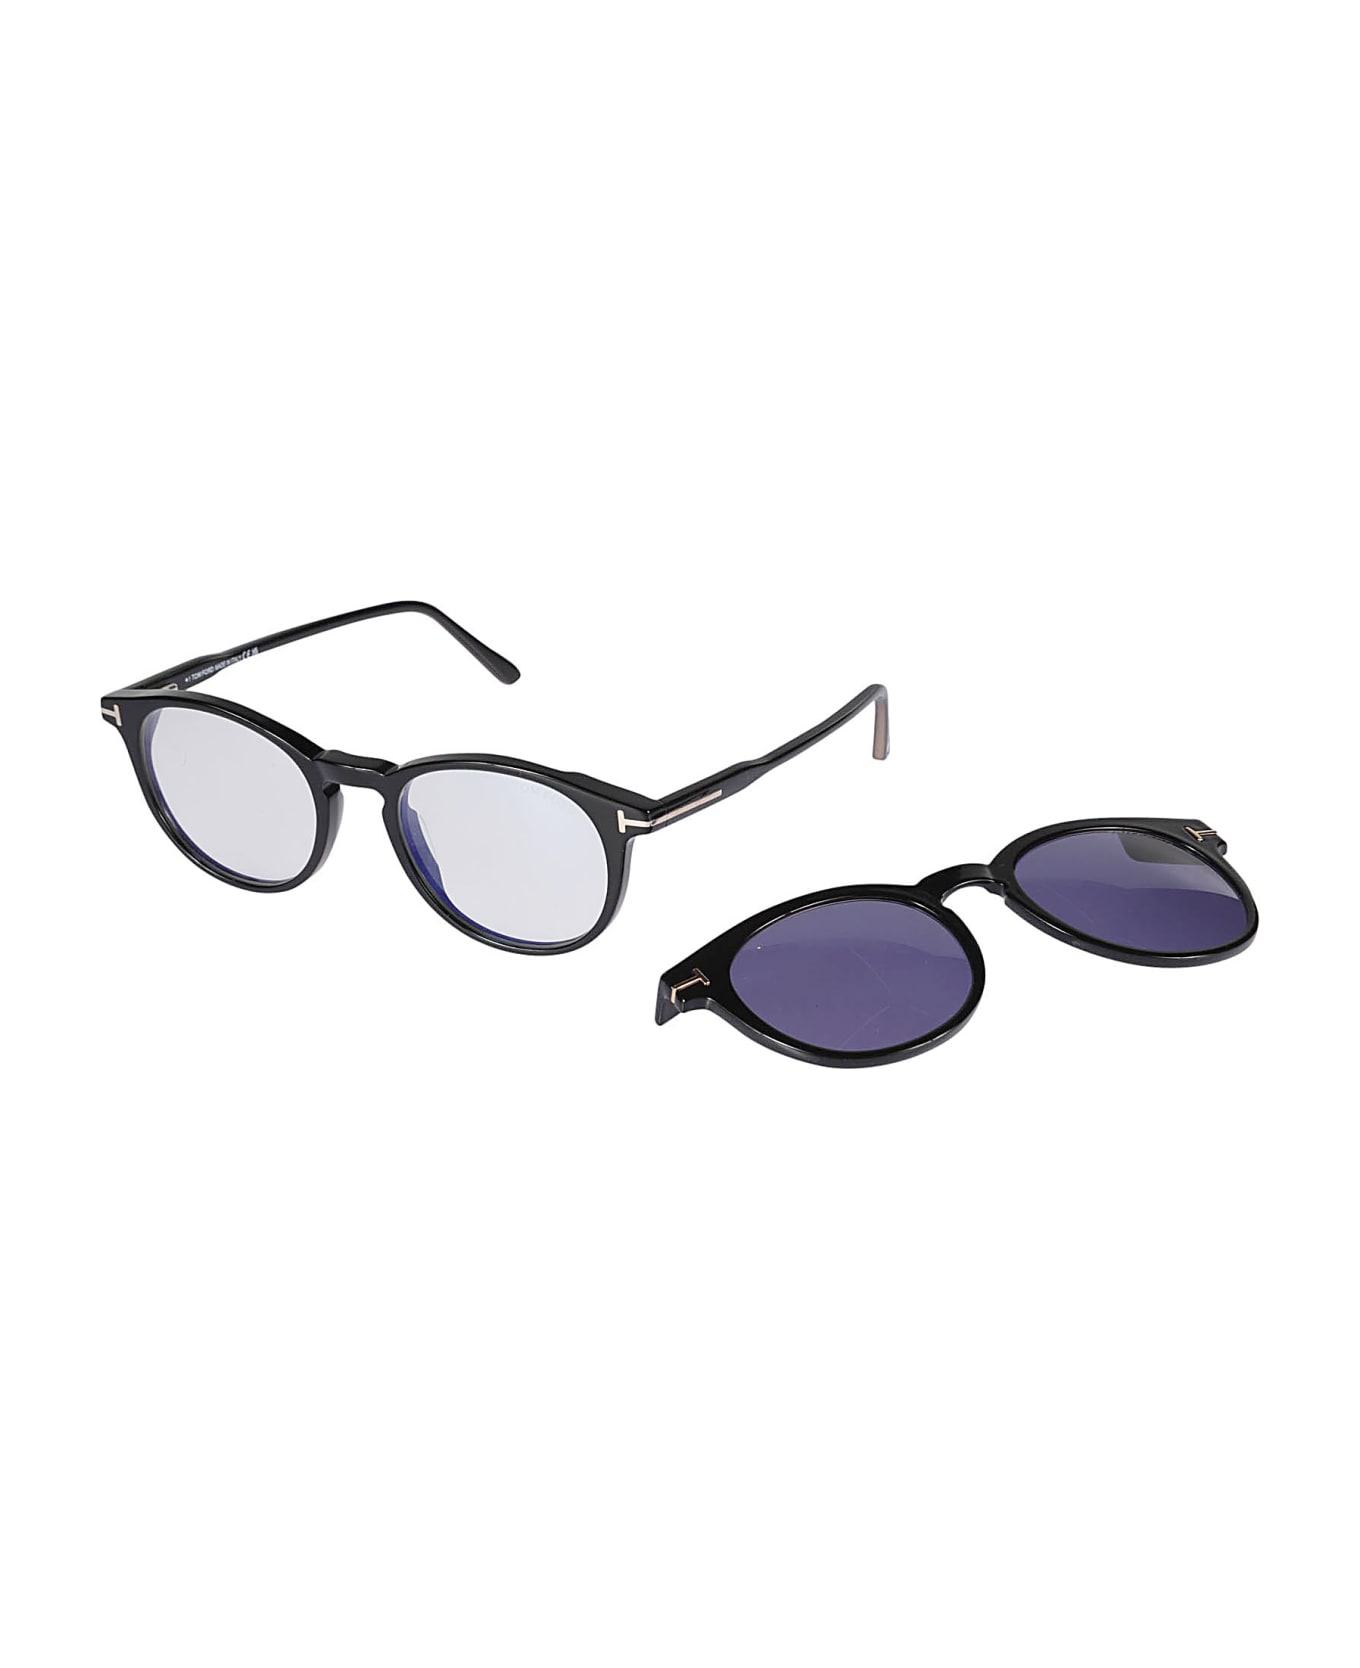 Tom Ford Eyewear Classic Round Lens Sunglasses - 001 サングラス